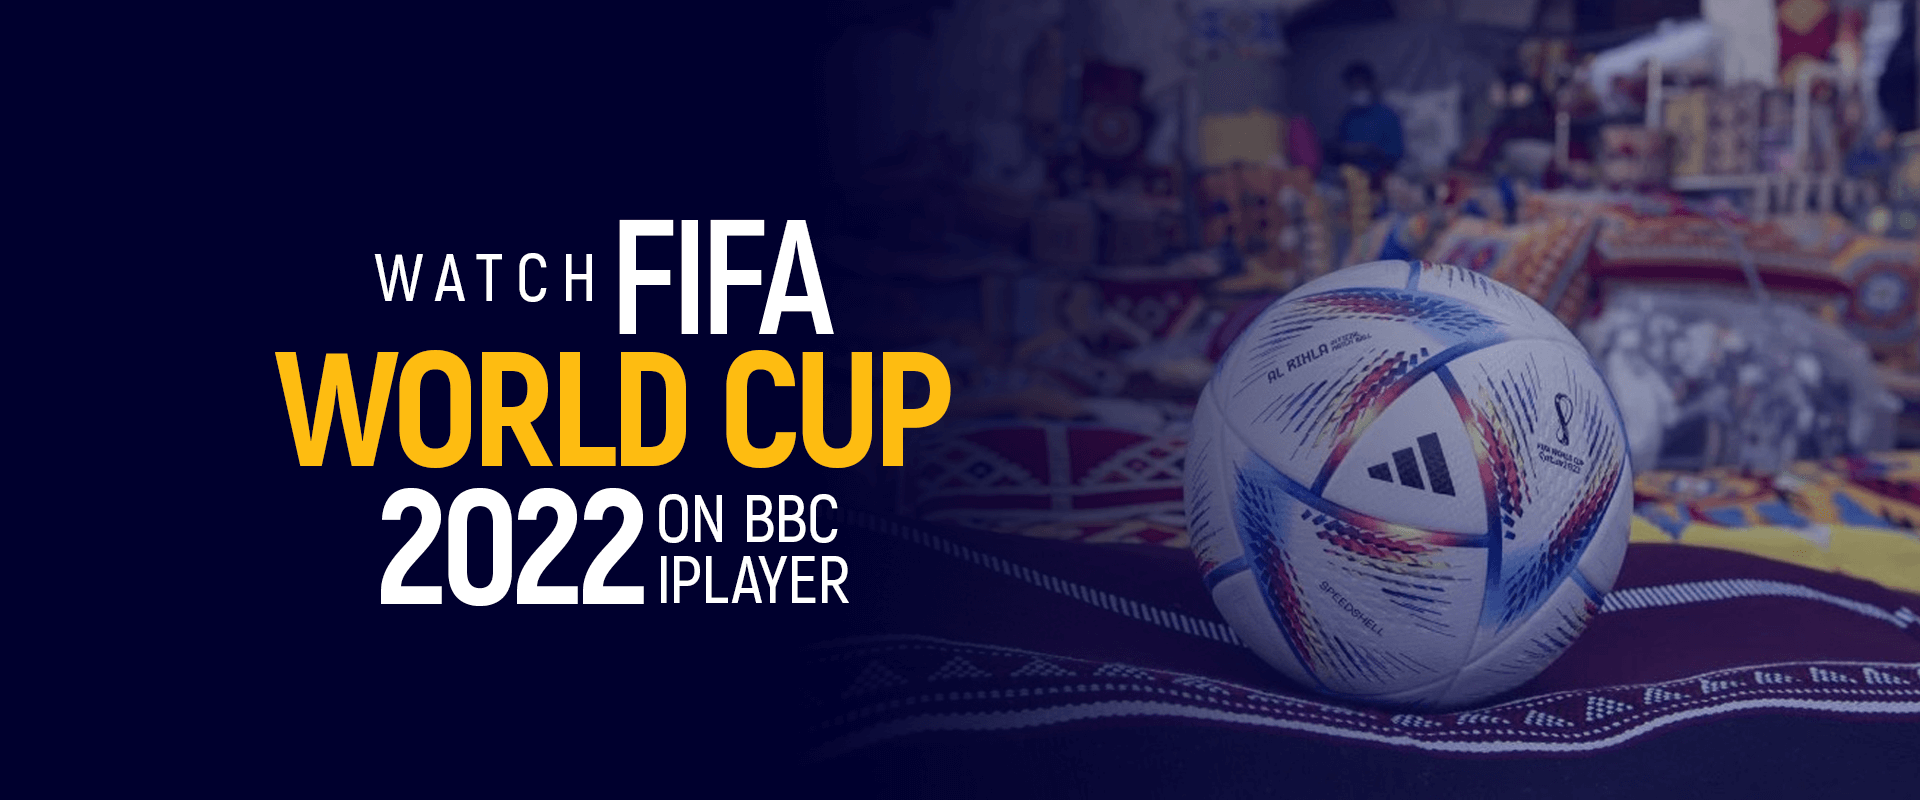 bbc world cup watch live